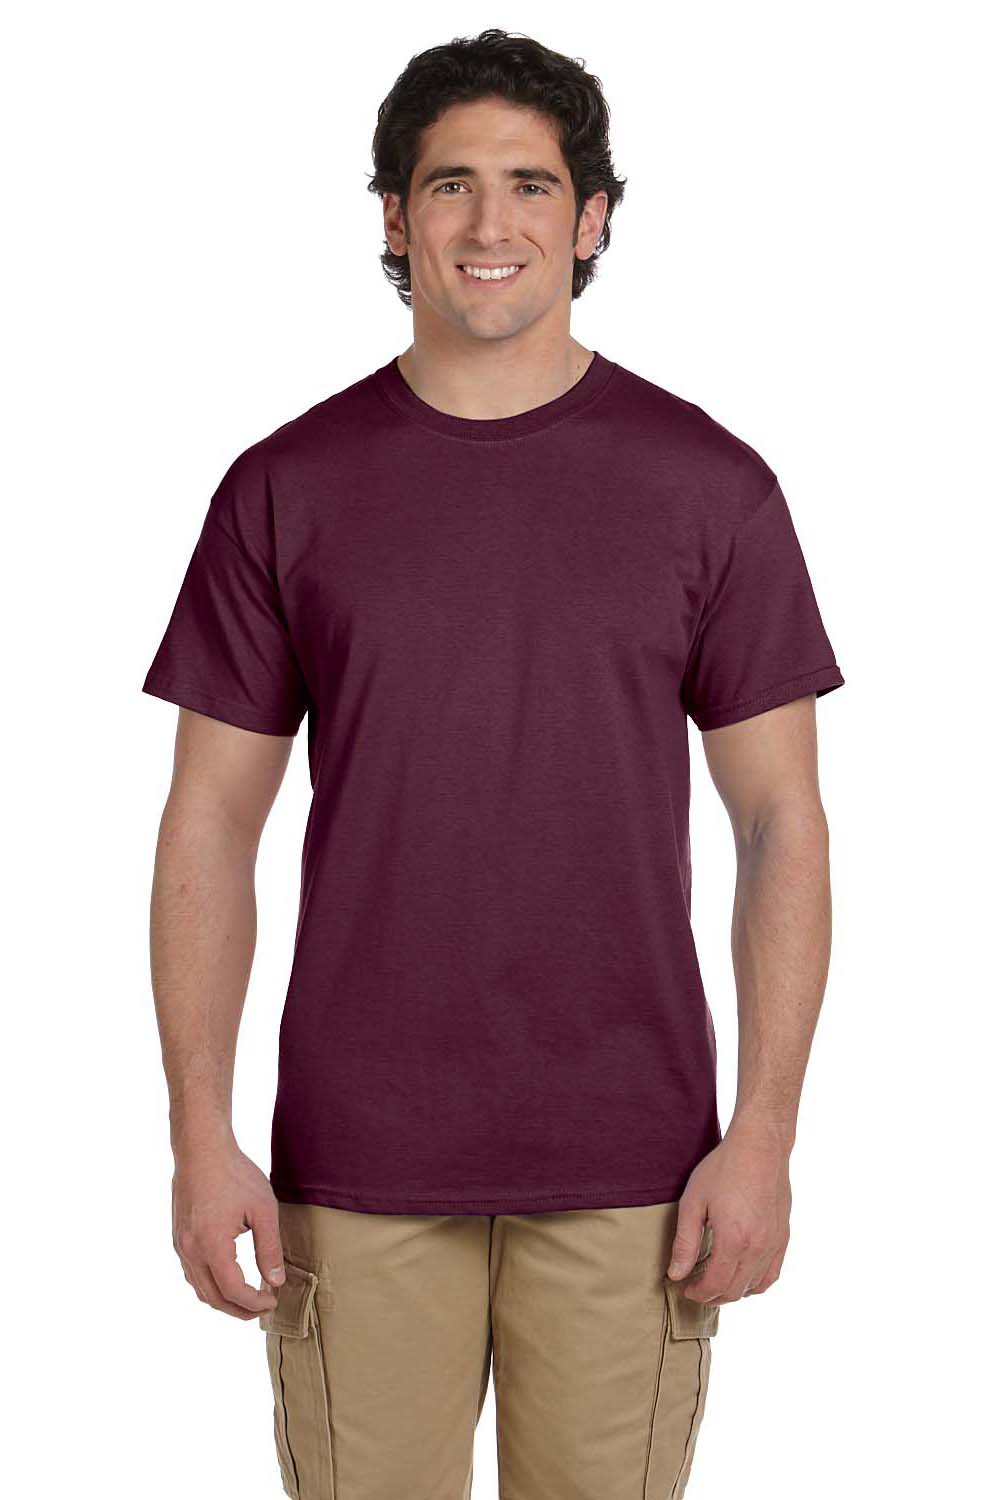 Hanes 5170 Mens EcoSmart Short Sleeve Crewneck T-Shirt Maroon Front